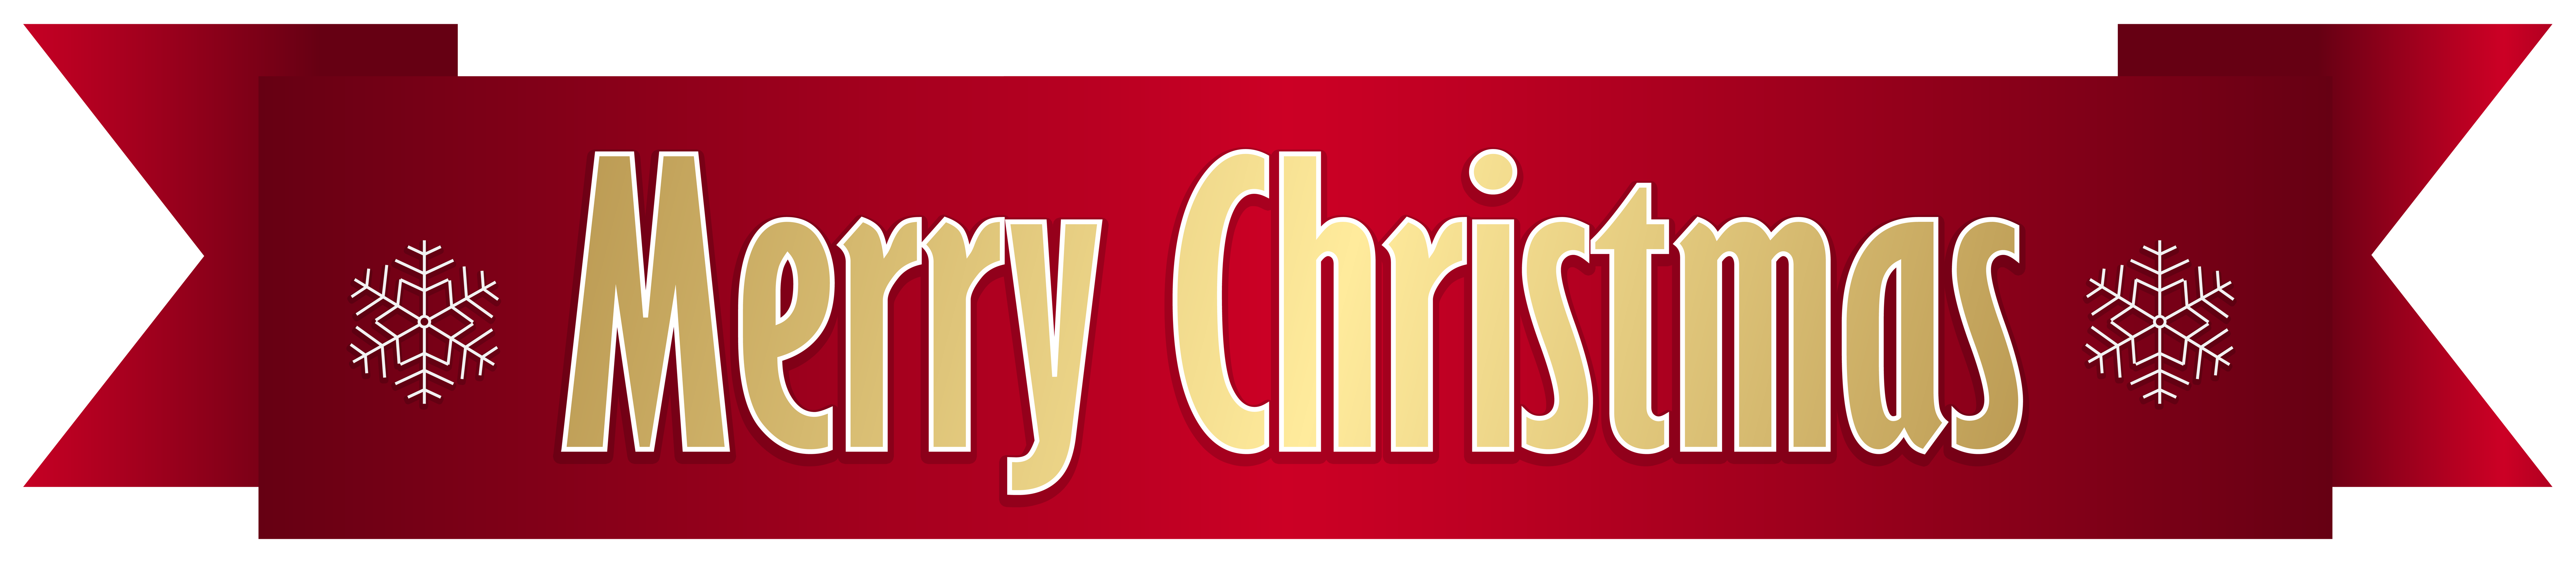 Christmas Banner Stock Illustrations – 695,730 Christmas Banner - Clip ...